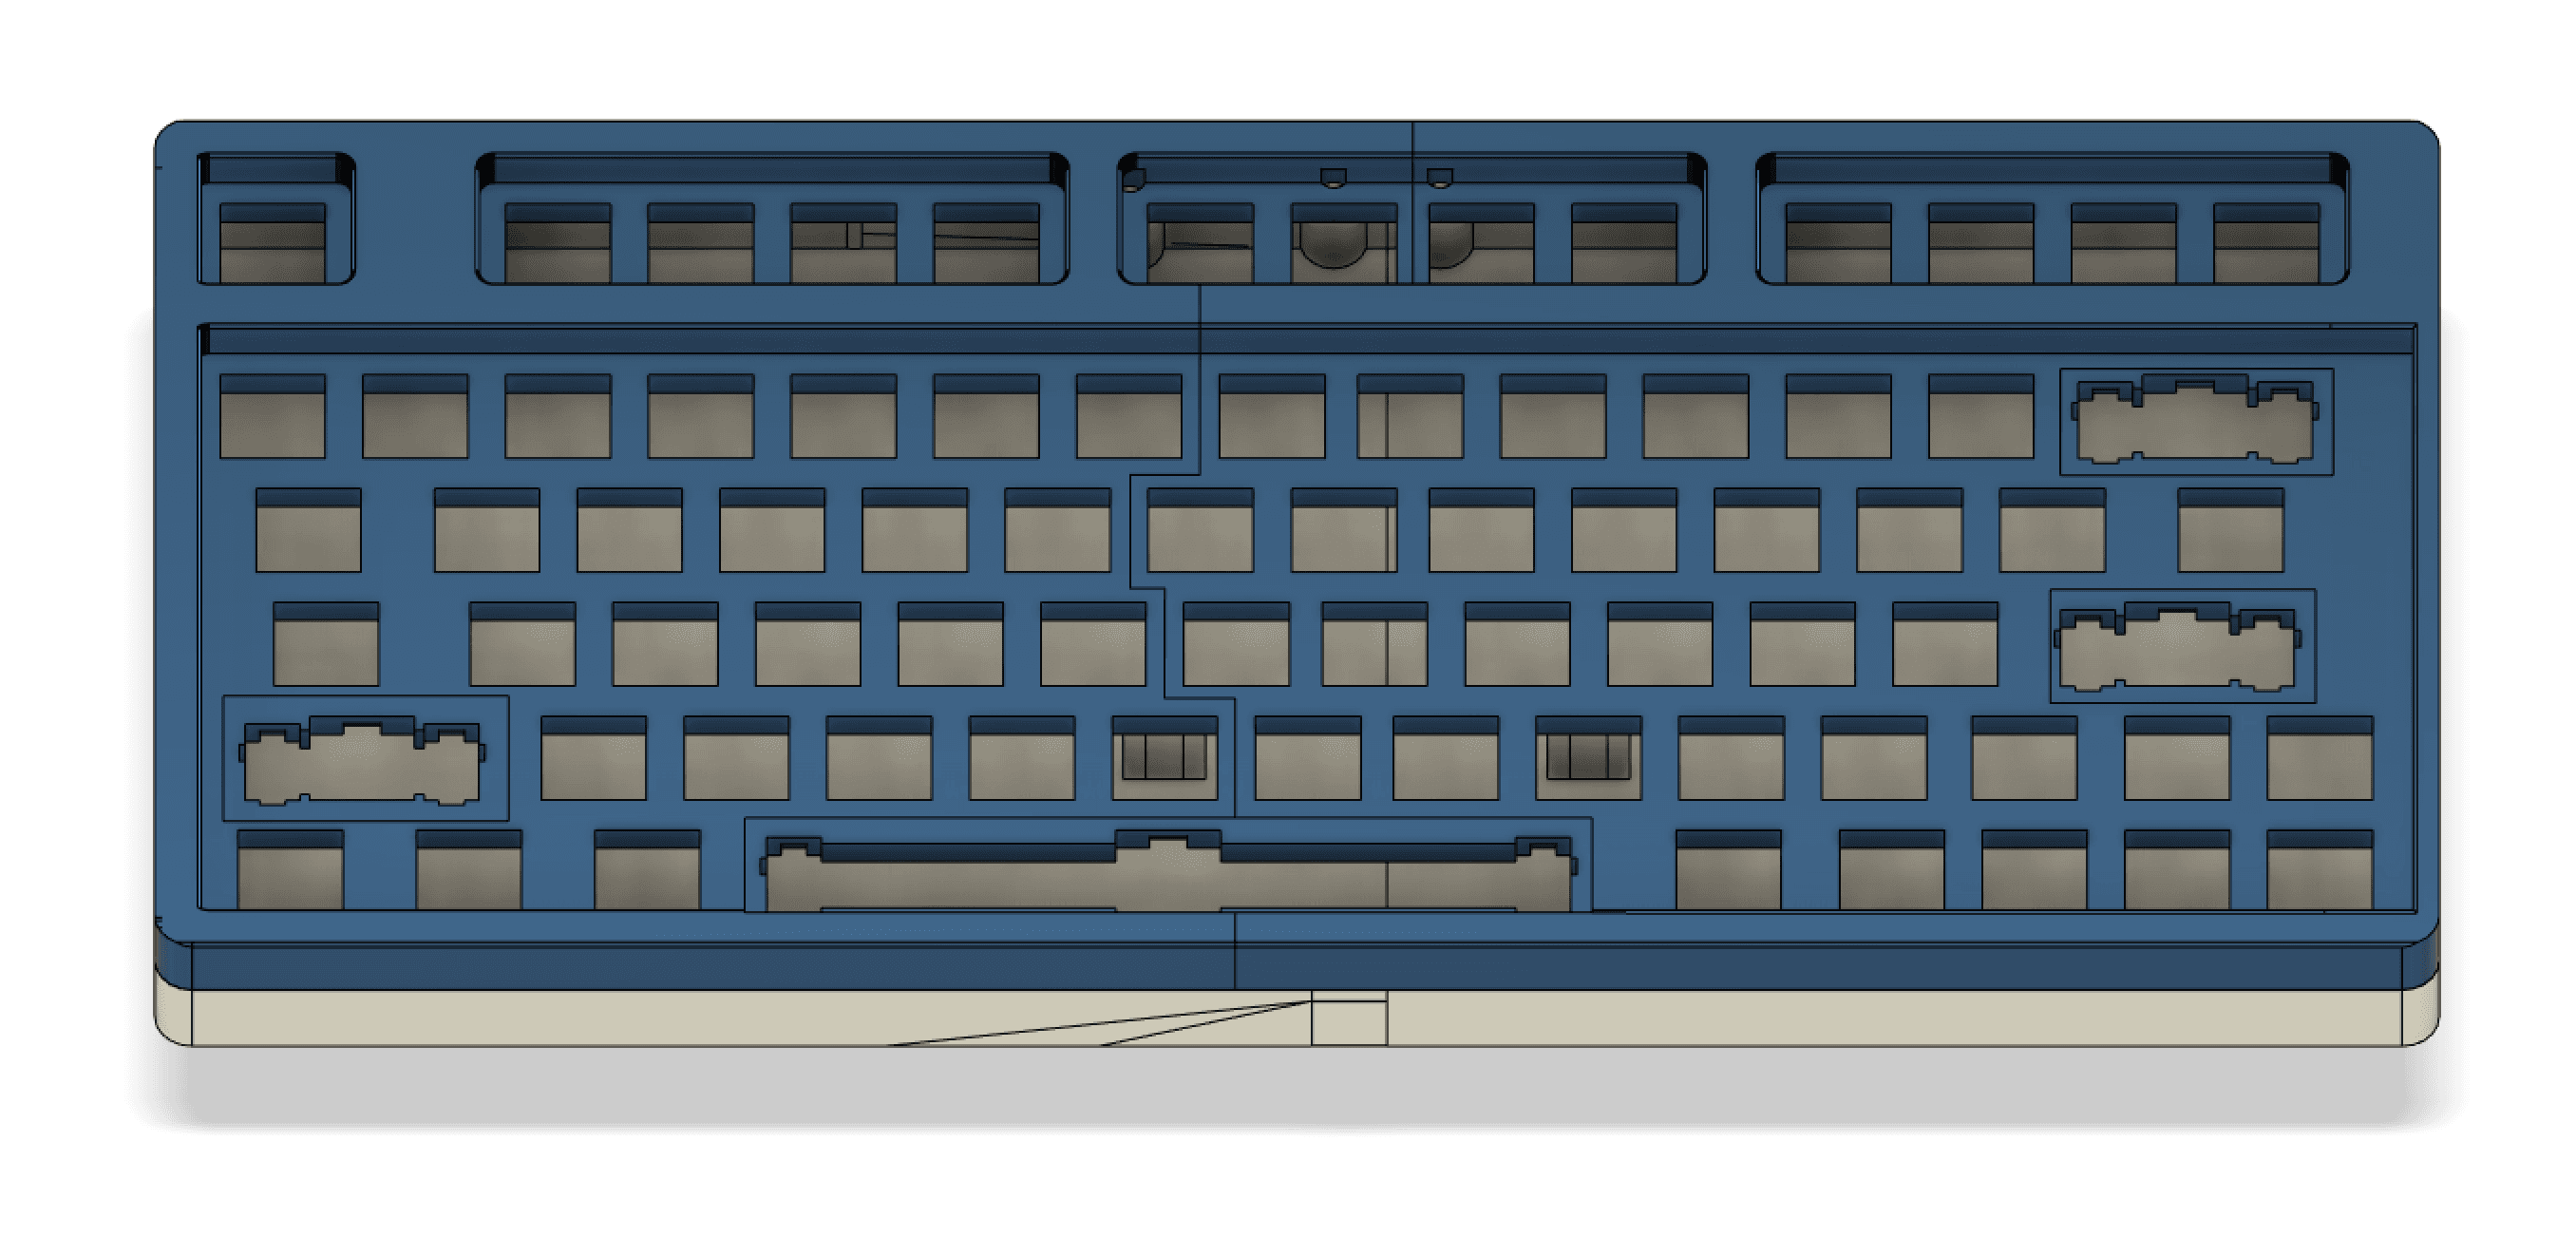 Mako 69 V2 (70% Mechanical keyboard) 3d model